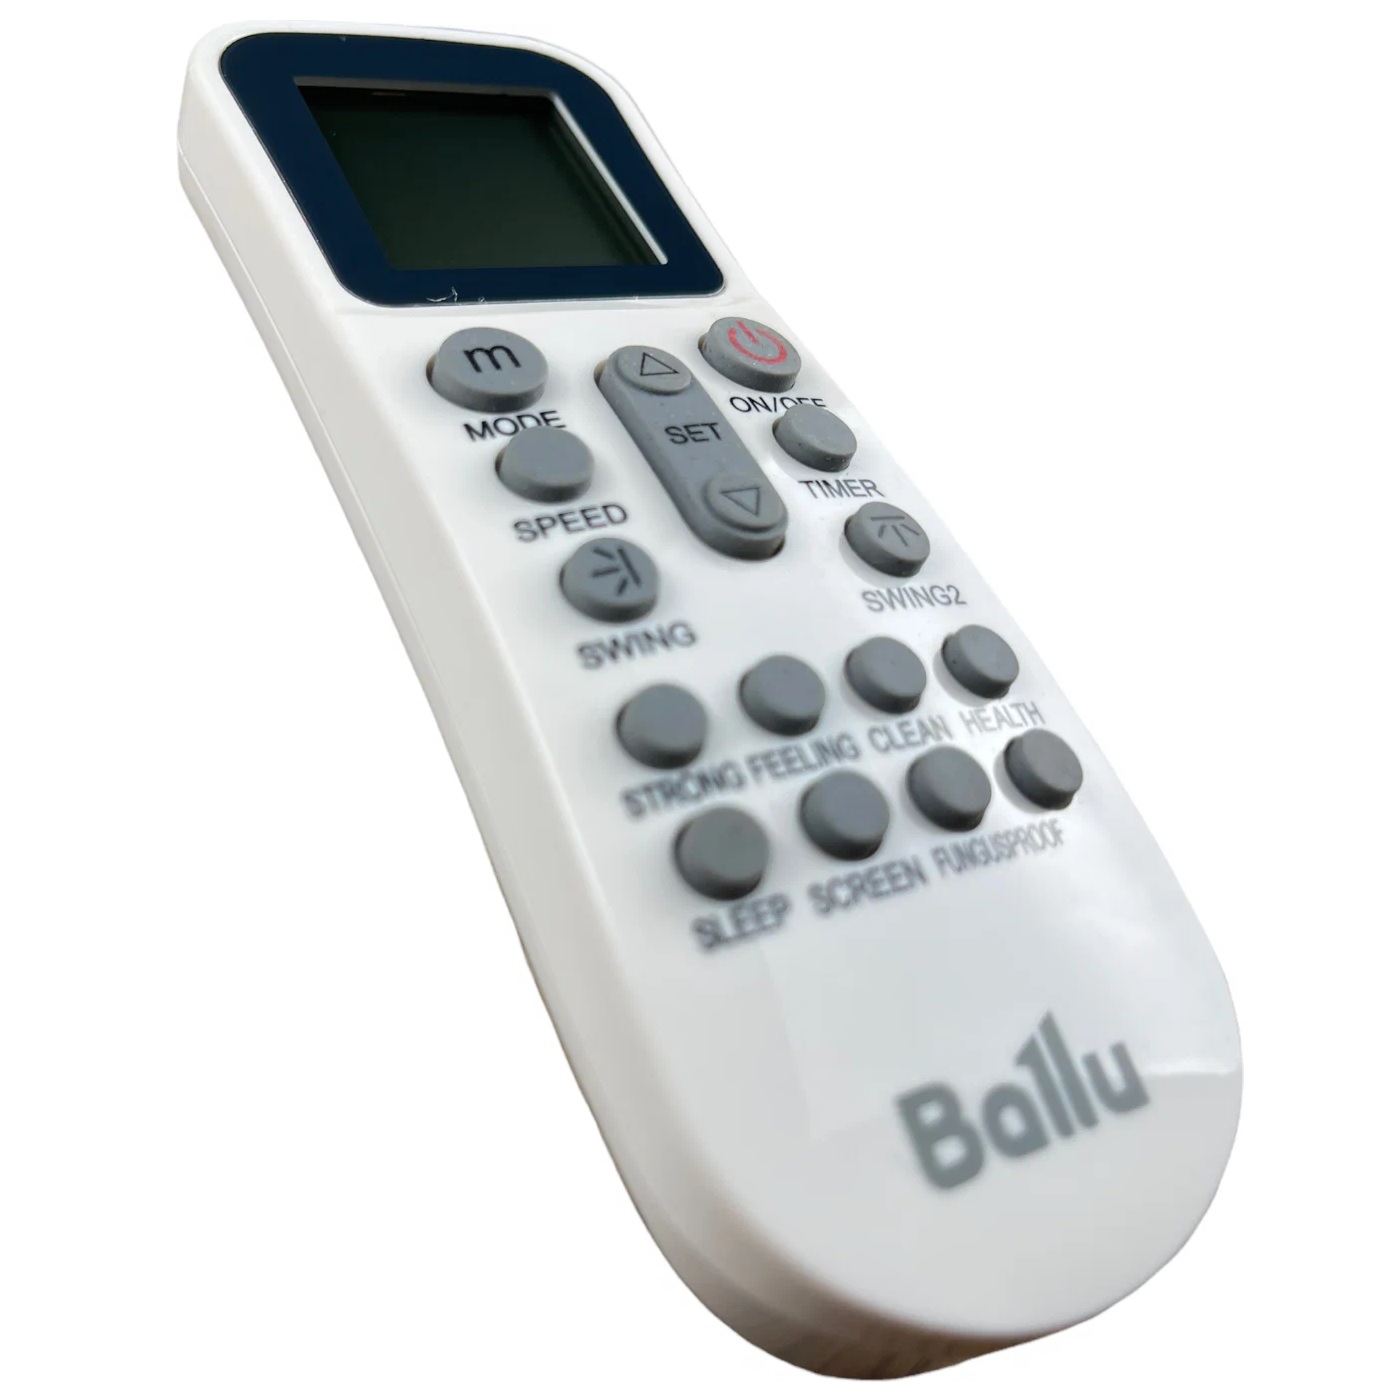 Ballu machine blc cf. Пульт для сплит системы Ballu YKR-K 204e. Ballu YKR-K/002e пульт. Ballu BSUI-fm/in-07hn8/eu пульт PNG. 105-057e пульт.